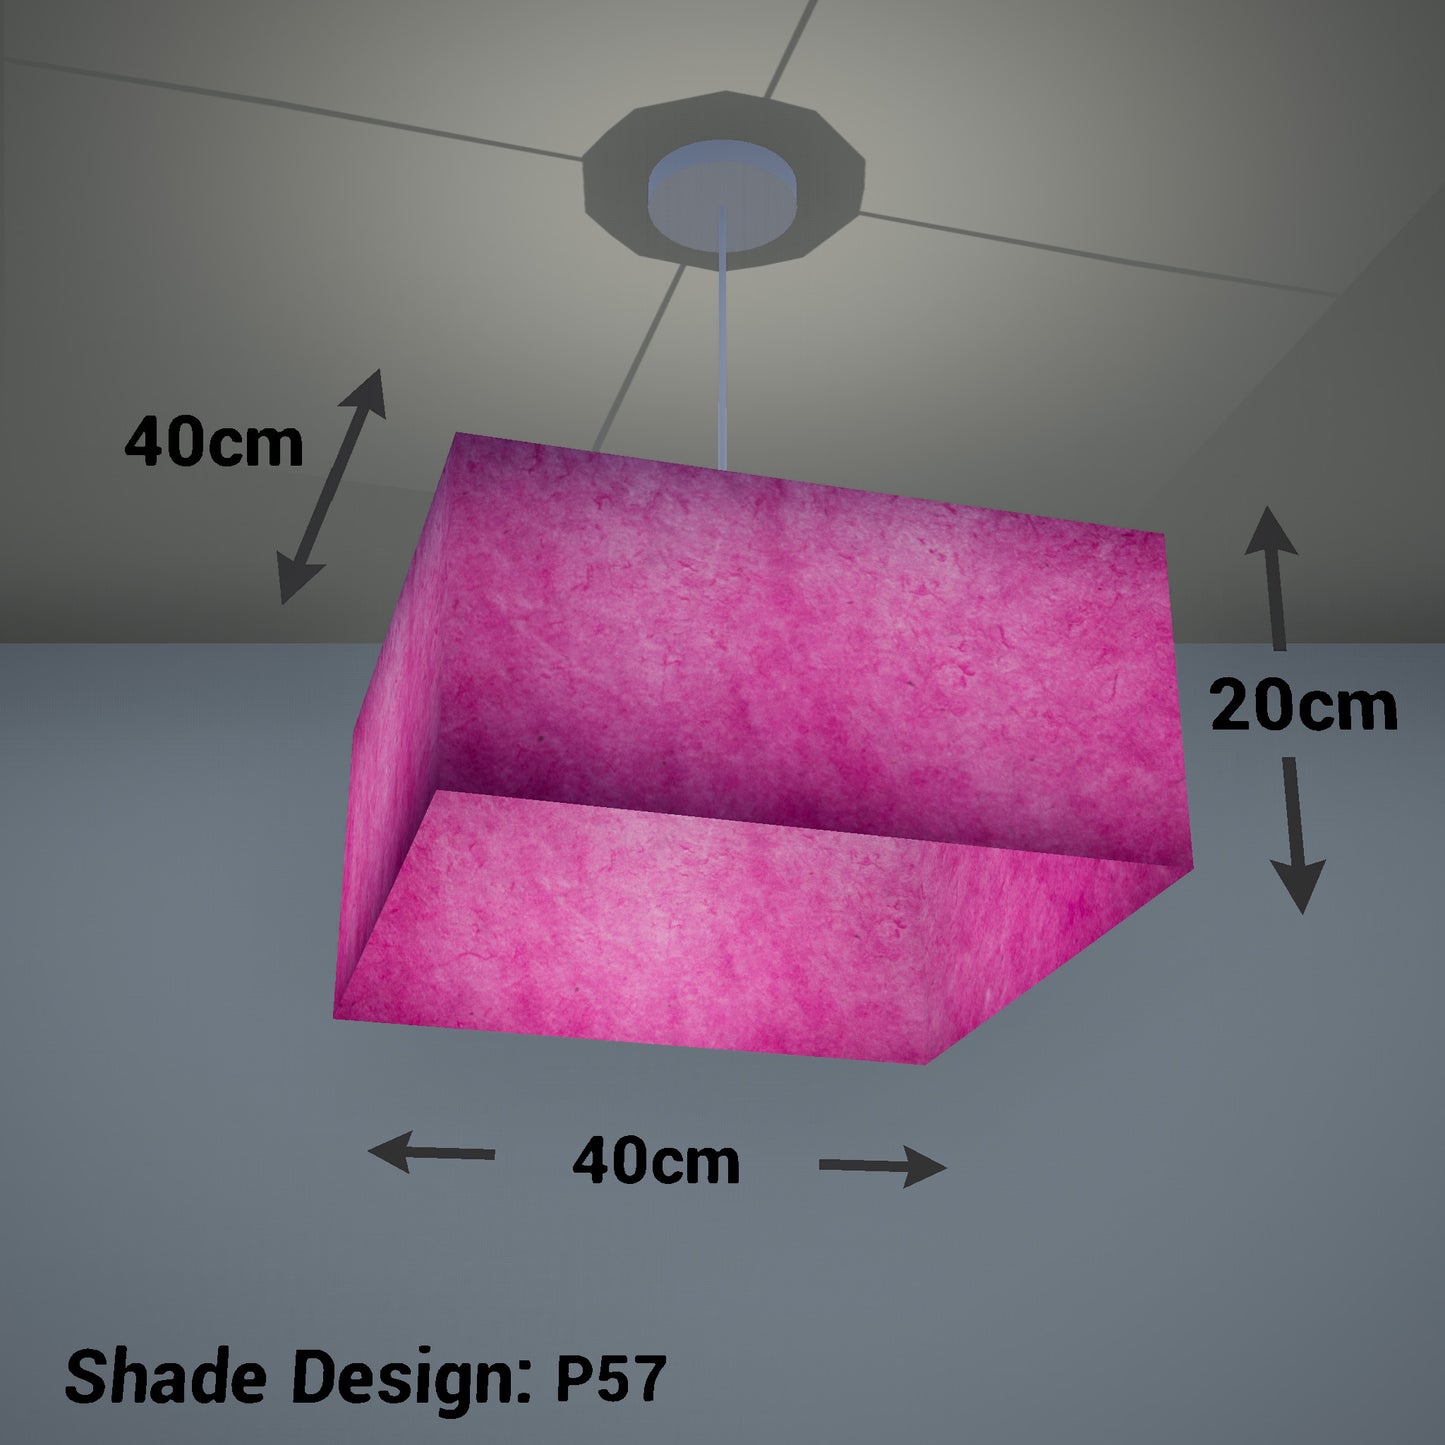 Square Lamp Shade - P57 - Hot Pink Lokta, 40cm(w) x 20cm(h) x 40cm(d)